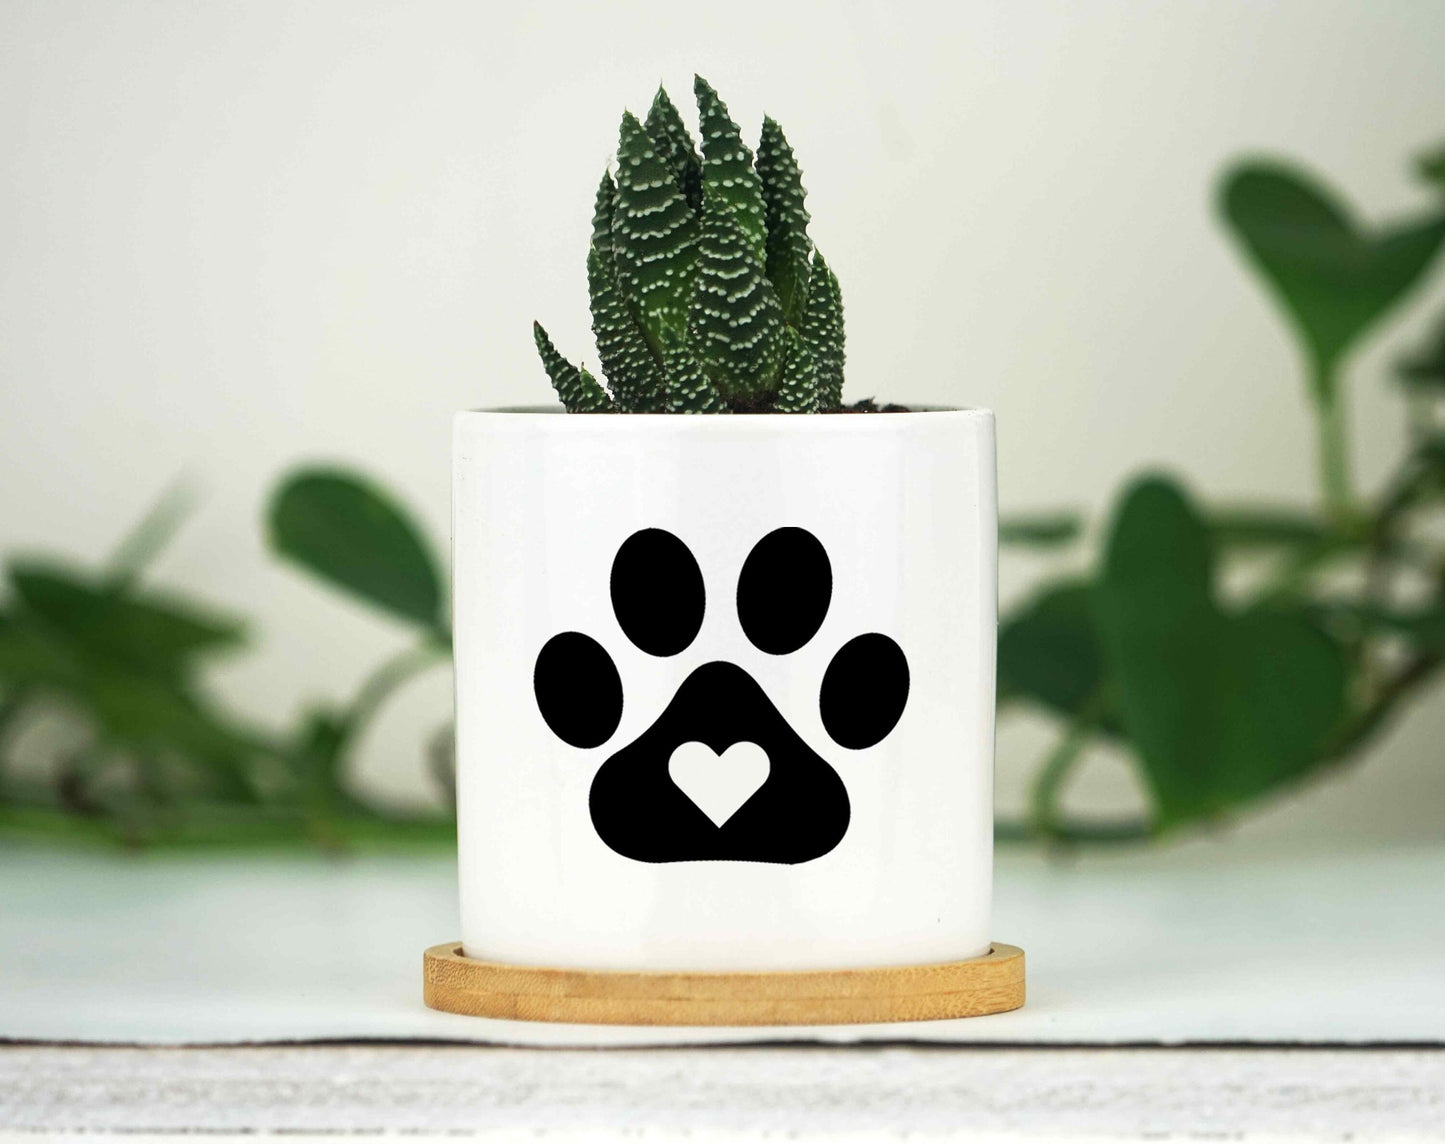 Personalized Pet Memorial Printed 4" or 6" - Wood Photo Block - Dog Loss Gift - Pet Remembrance - Dog Memorial Frame - Deceased Pet Frame